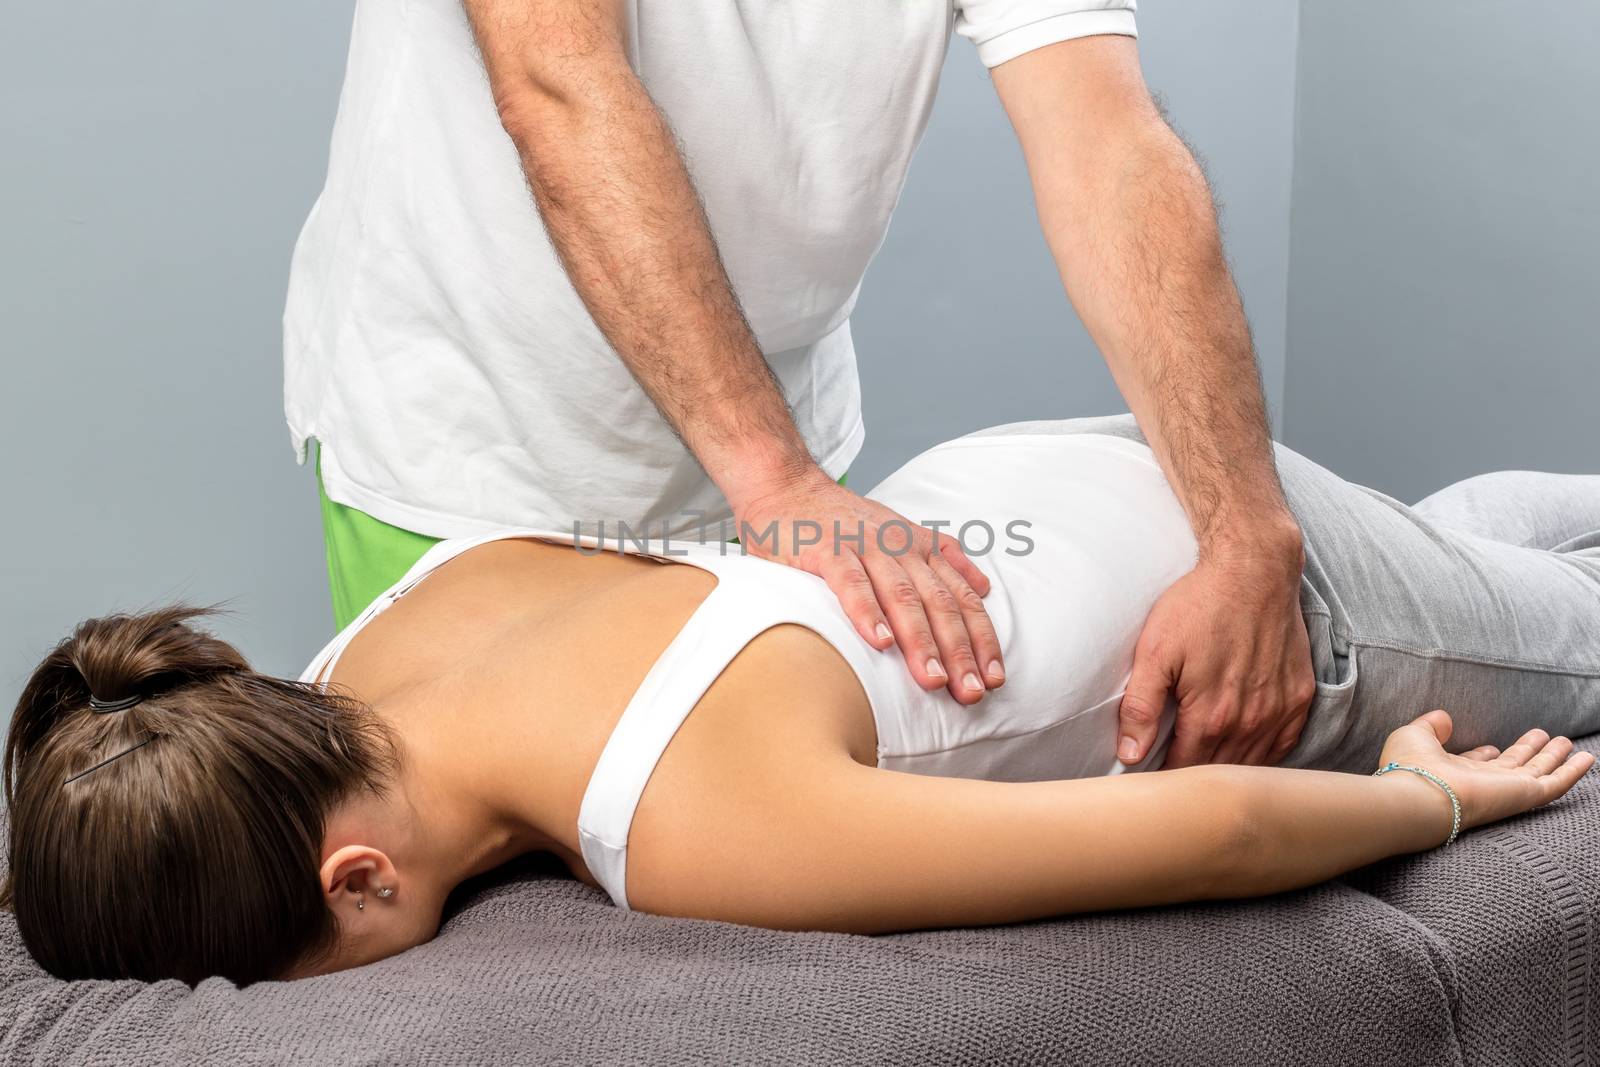 Physiotherapist doing massage on female lower back. by karelnoppe